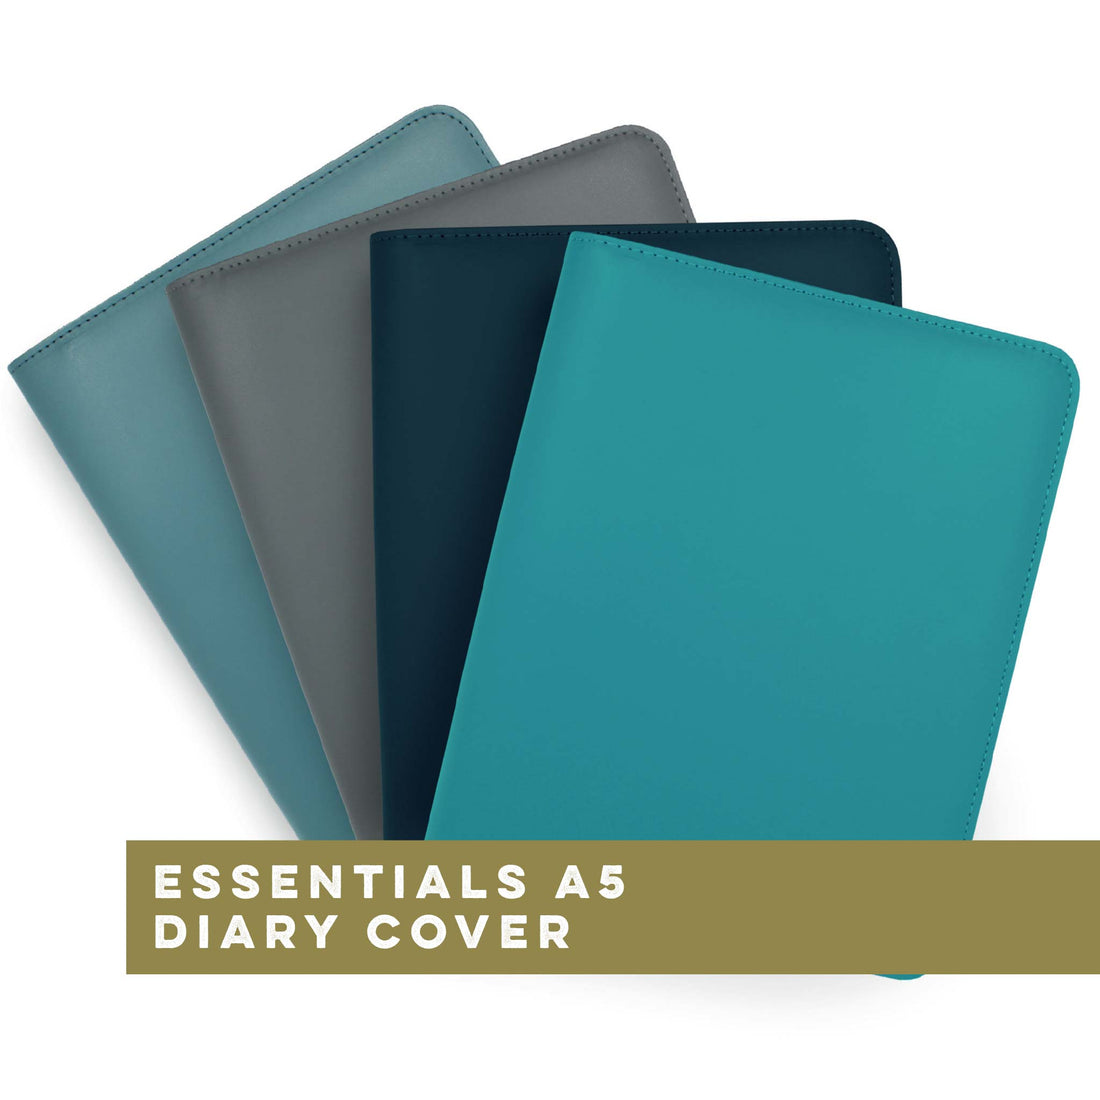 Essentials A5 Diary Cover